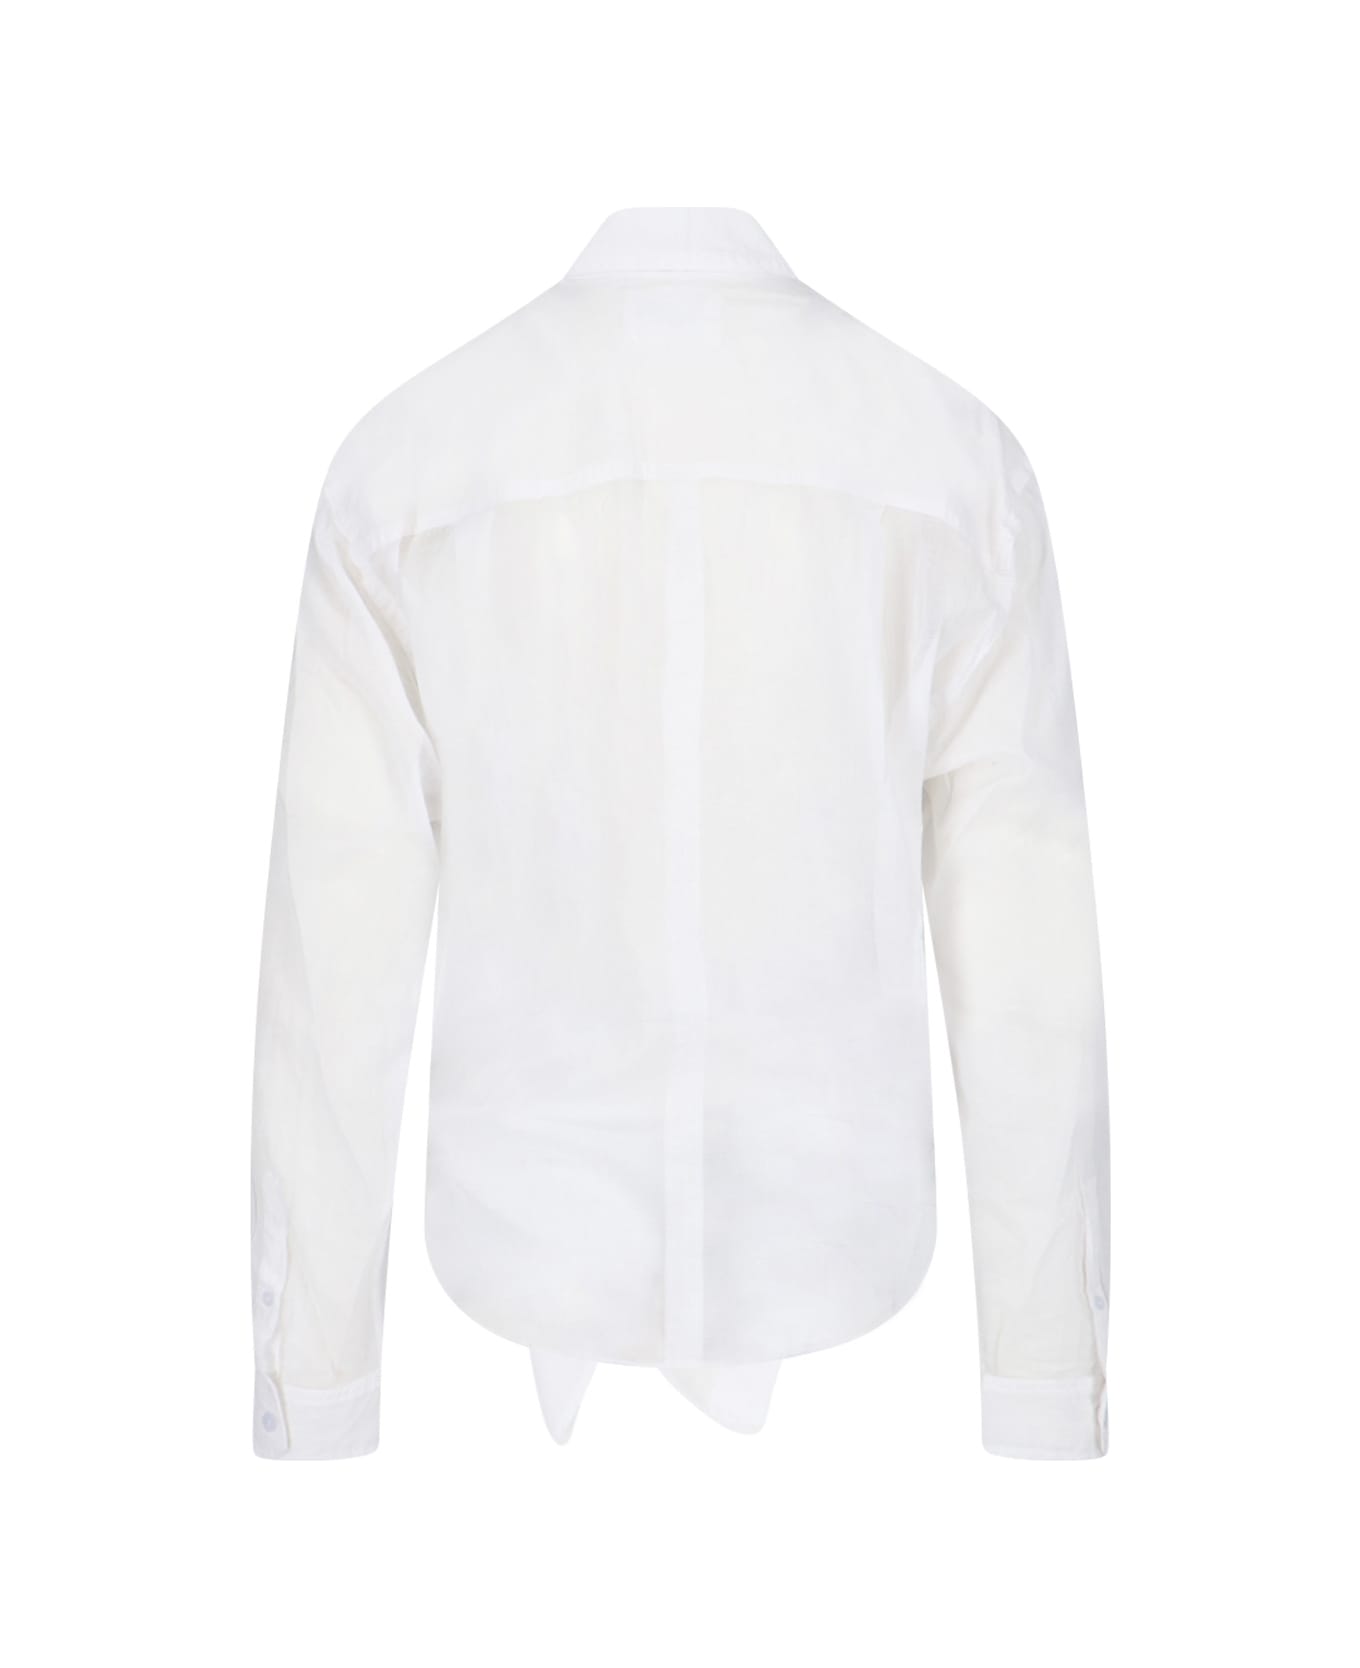 Marant Étoile Nath Shirt - White